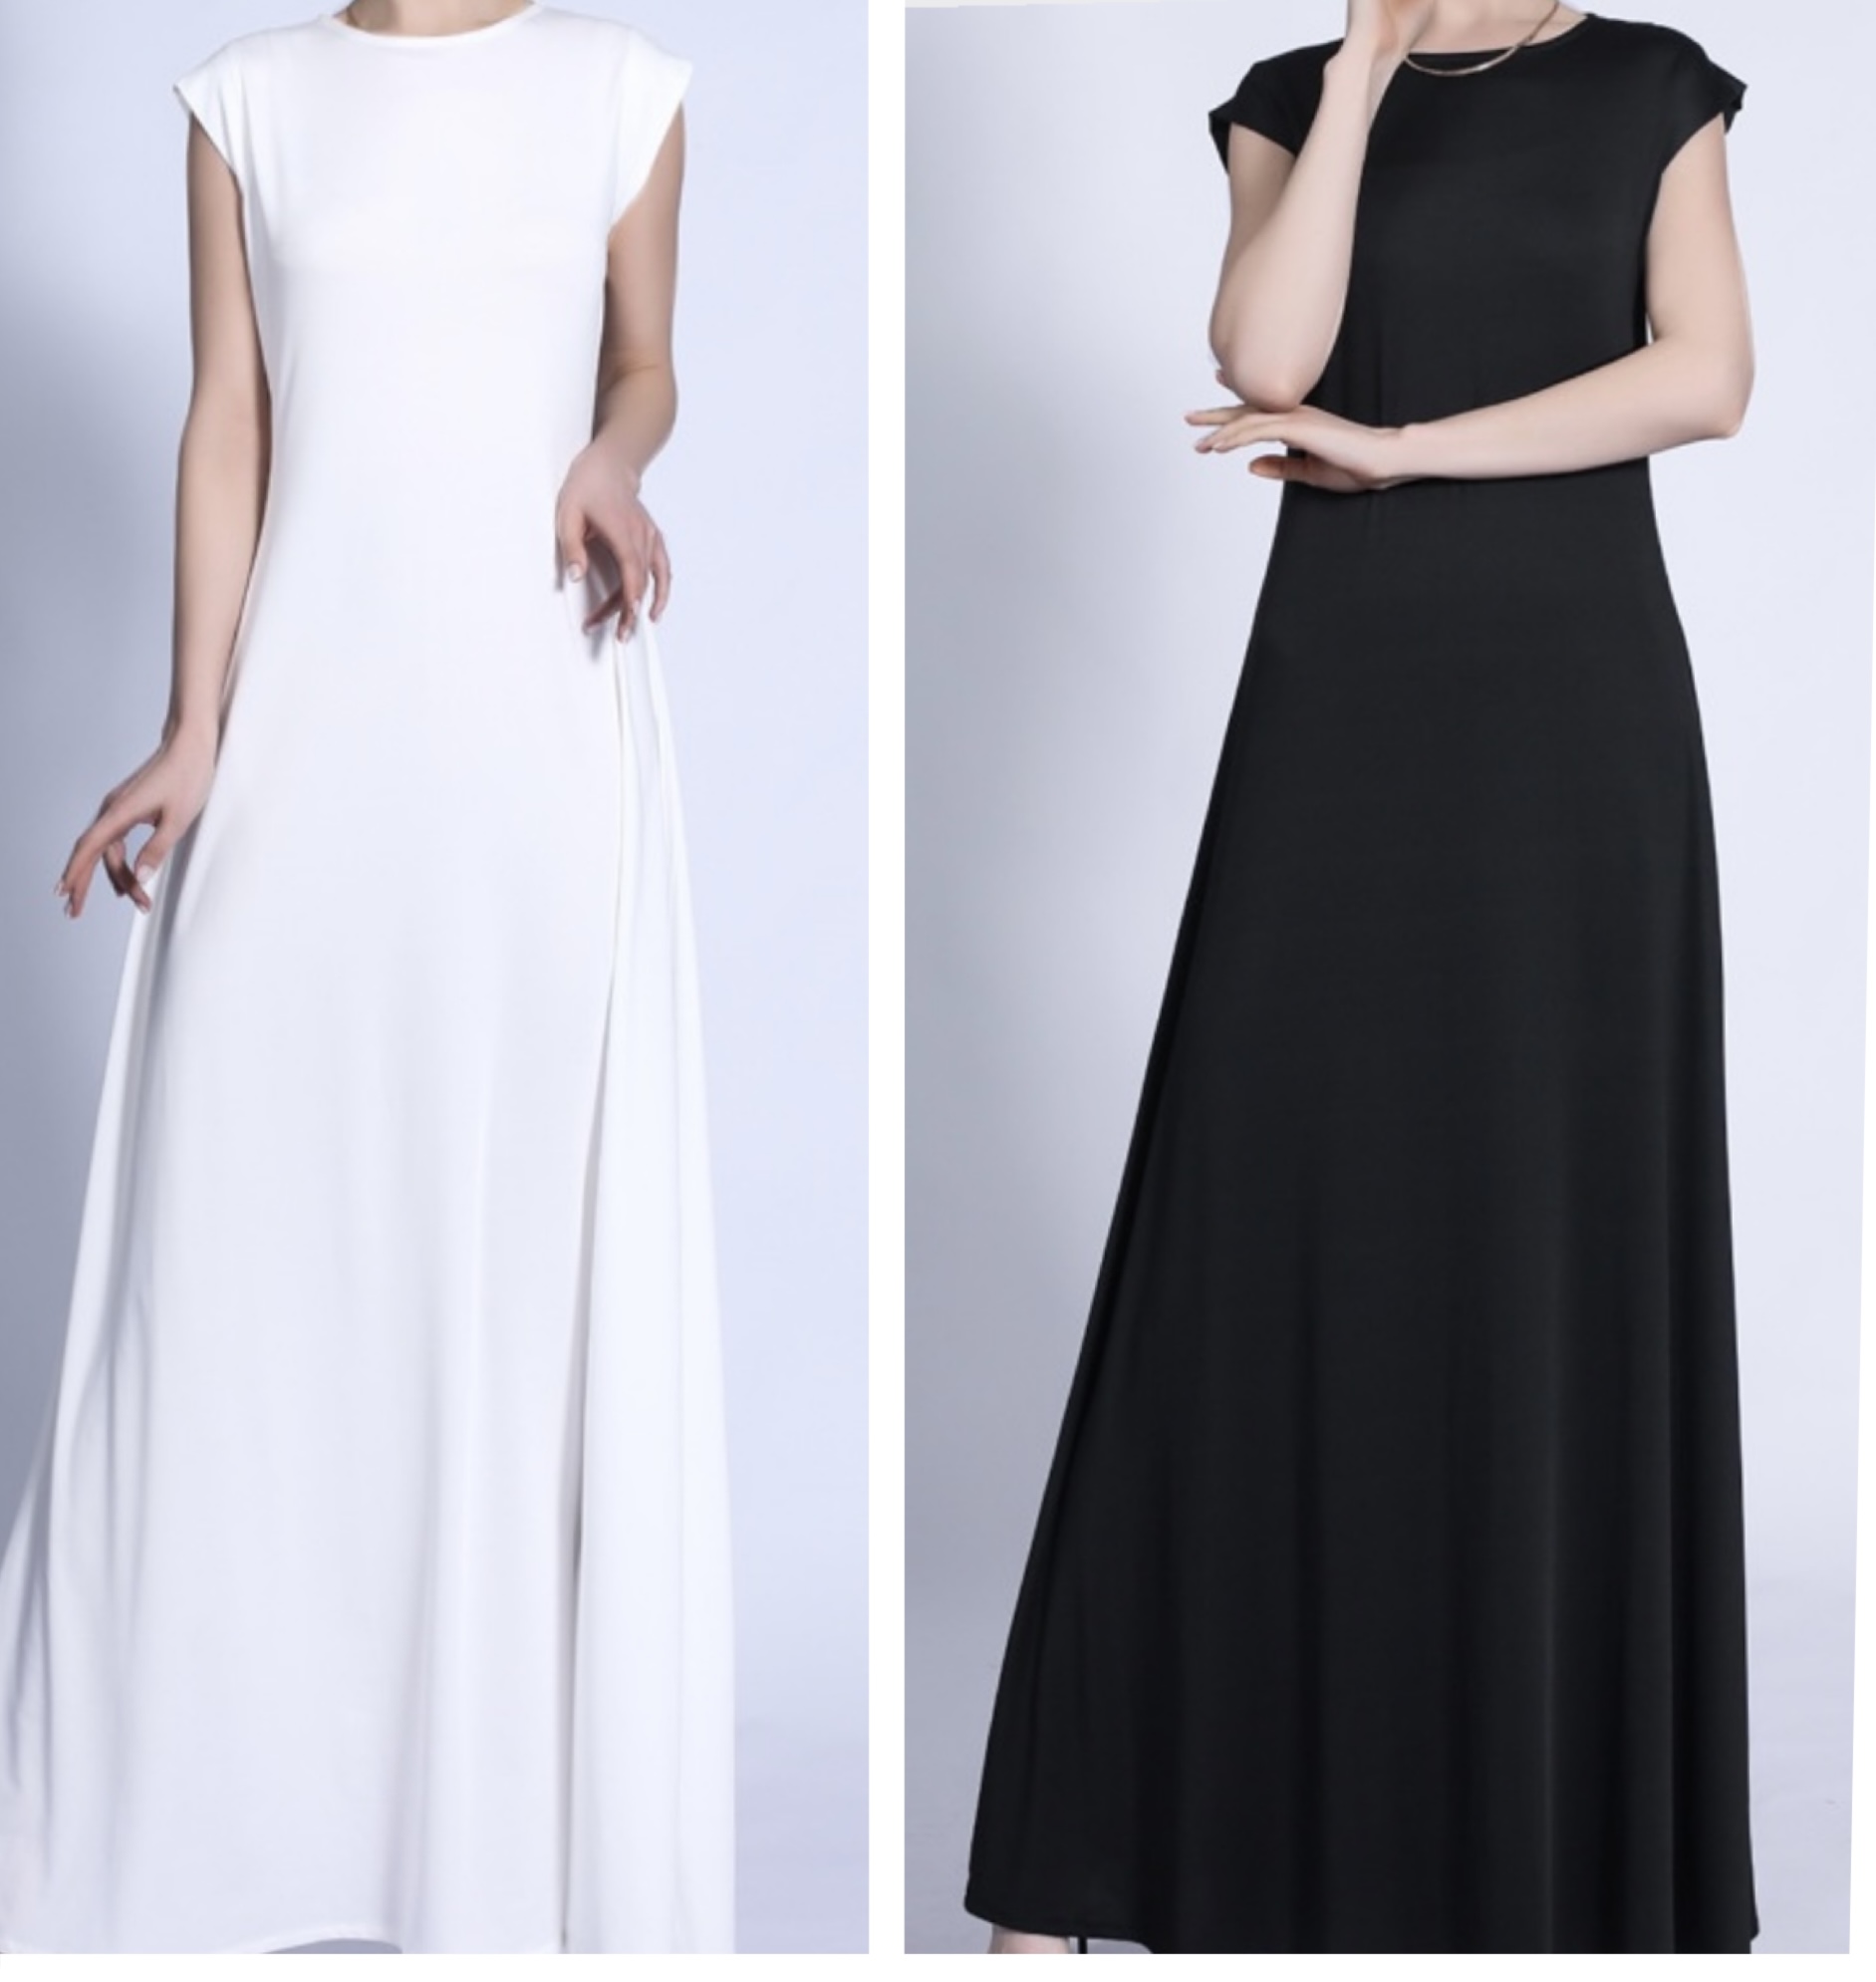 Muslim Under Abaya Inner Dress Solid Sleeveless Slip Dresses For Women  Islam Clothing Abayas Dubai Turkey Modest Robe Ra size XL Color black under  dress